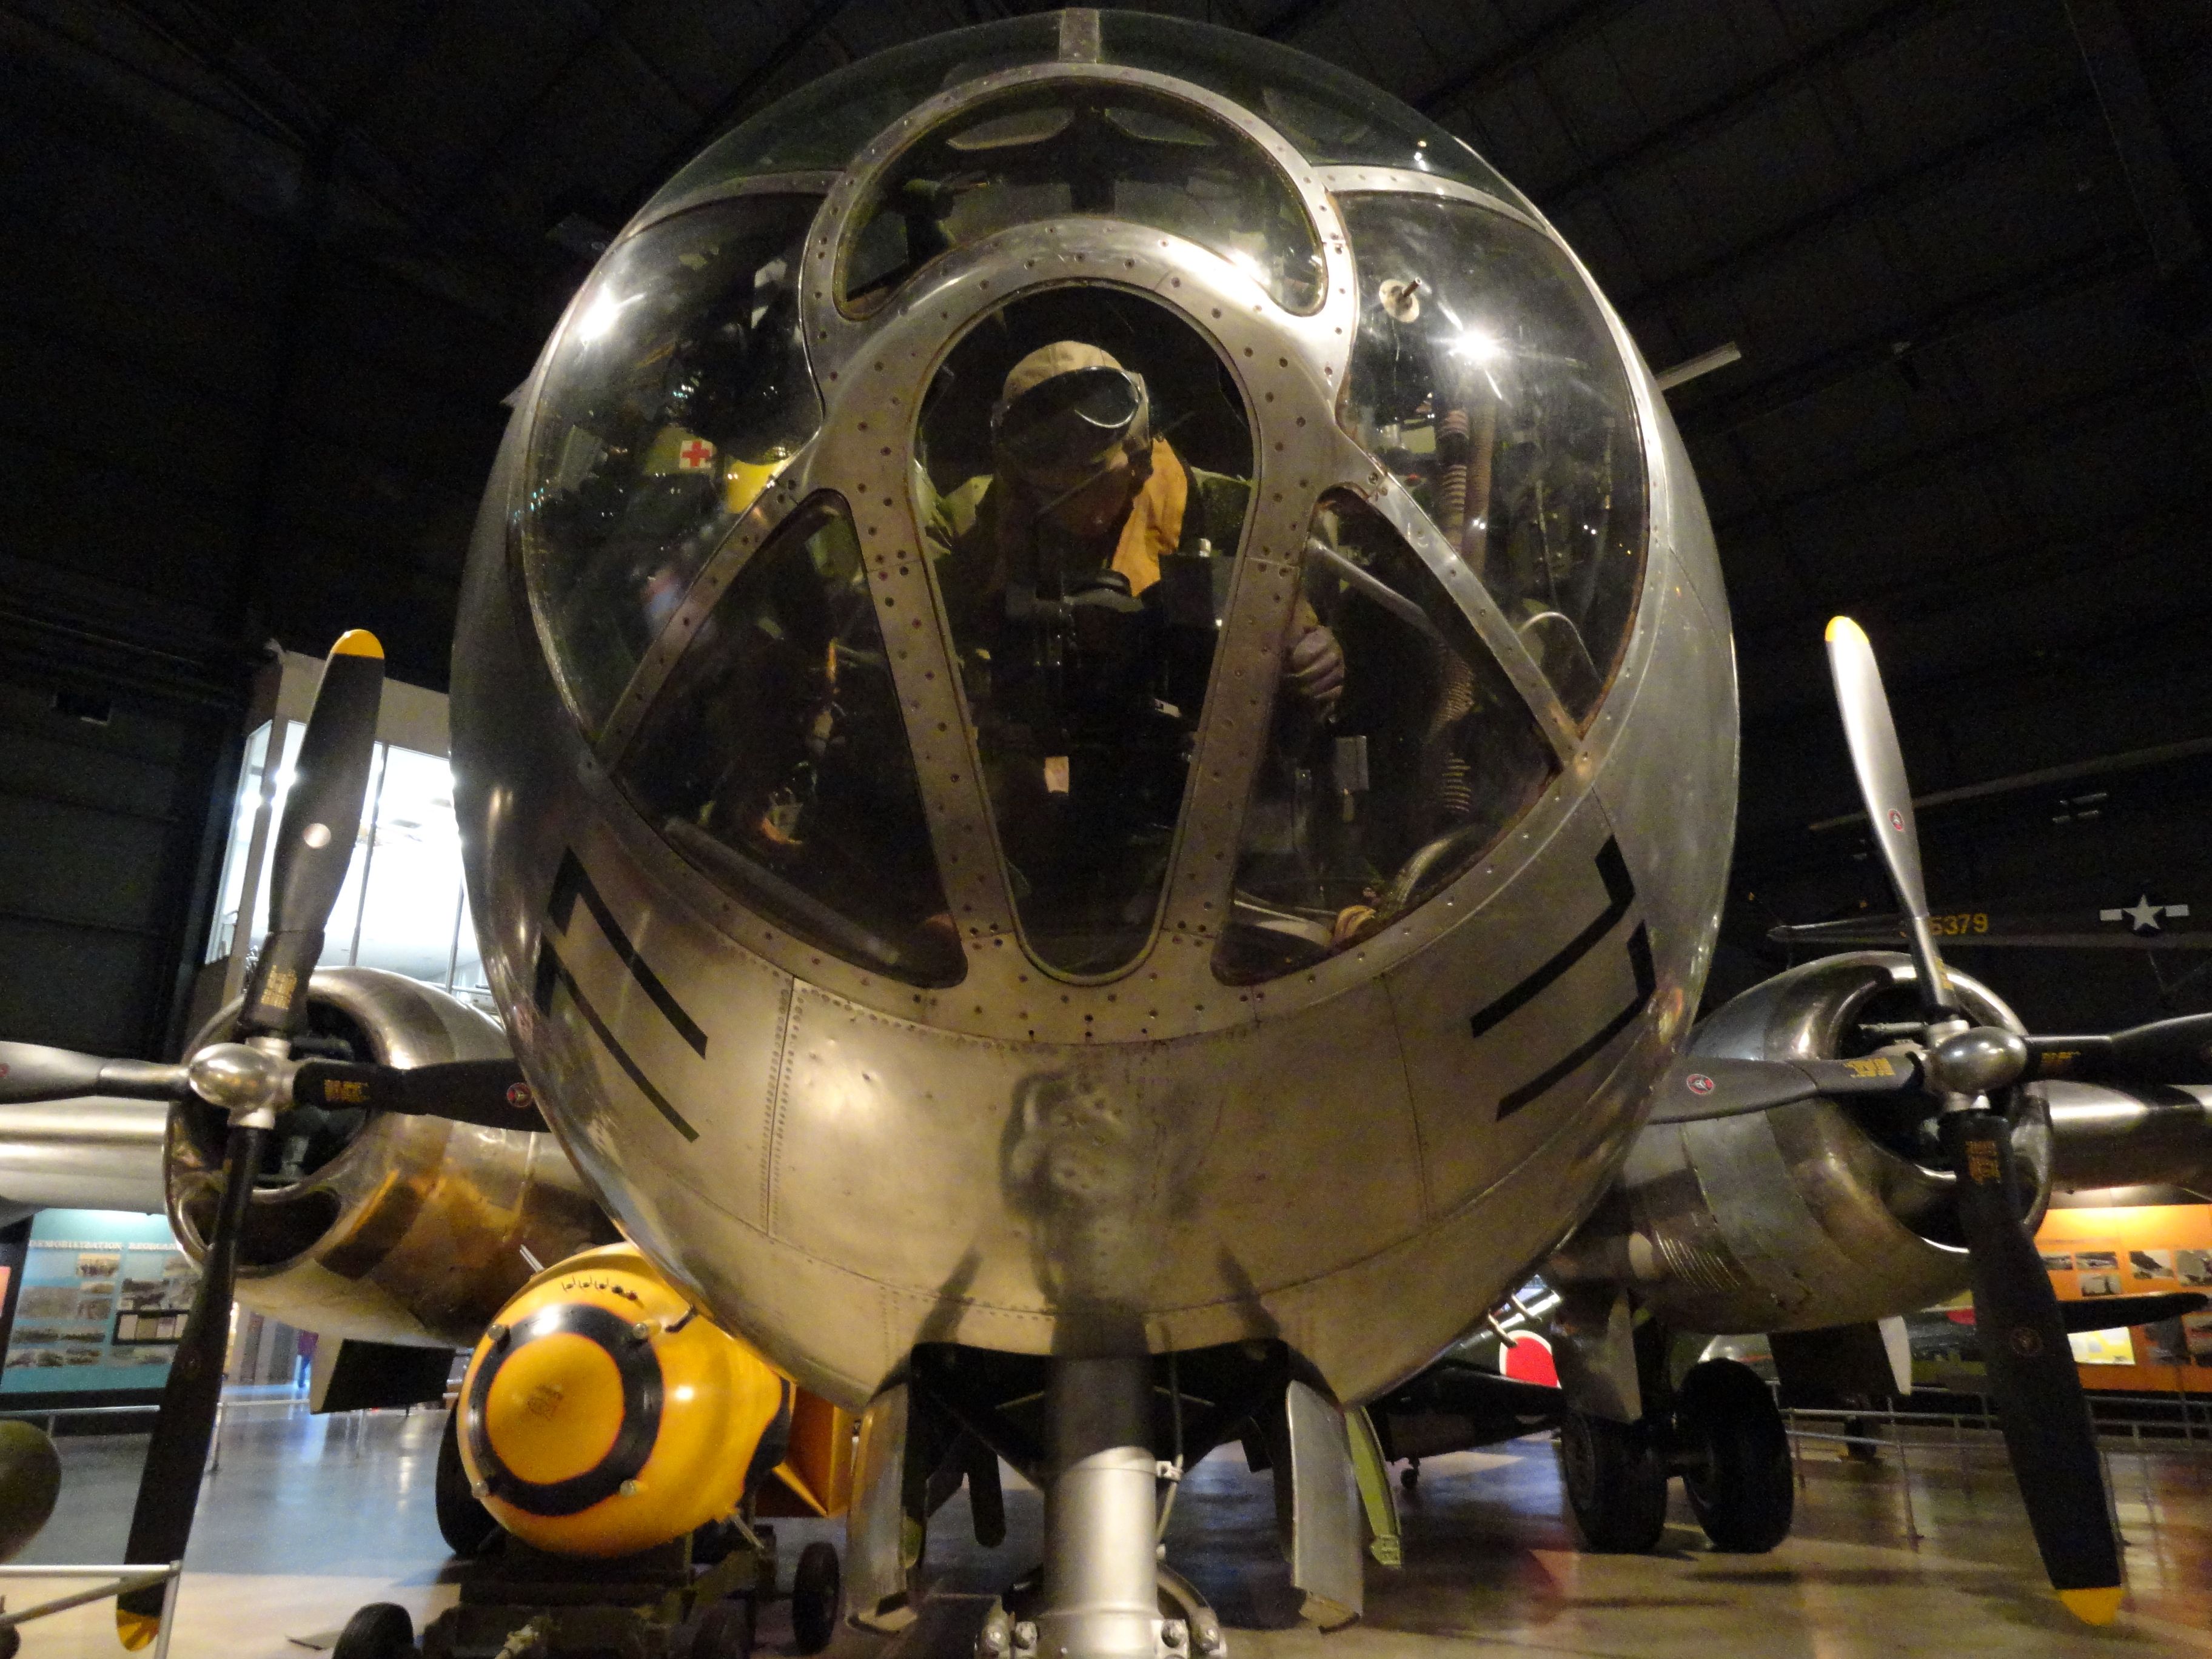 B-29 Superfortress "Bockscar"